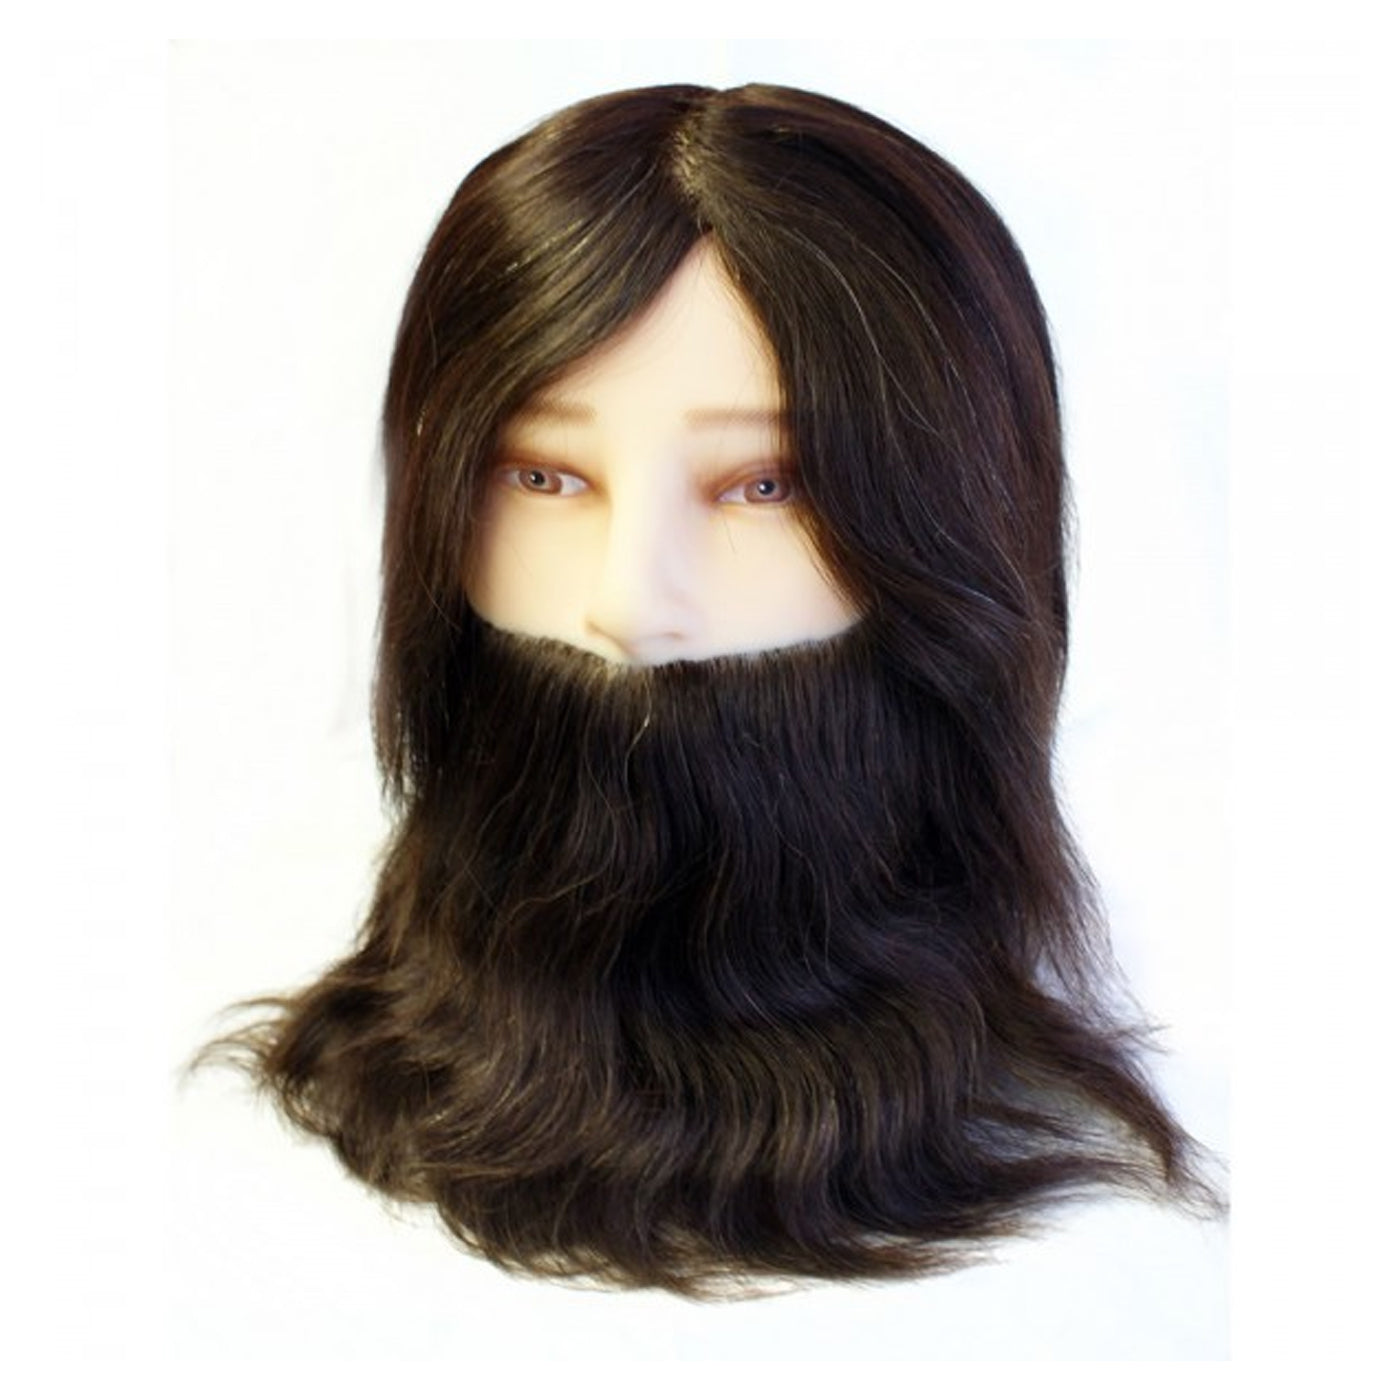 Hairtools Male Training Head with Beard - Ultimate Hair and Beauty